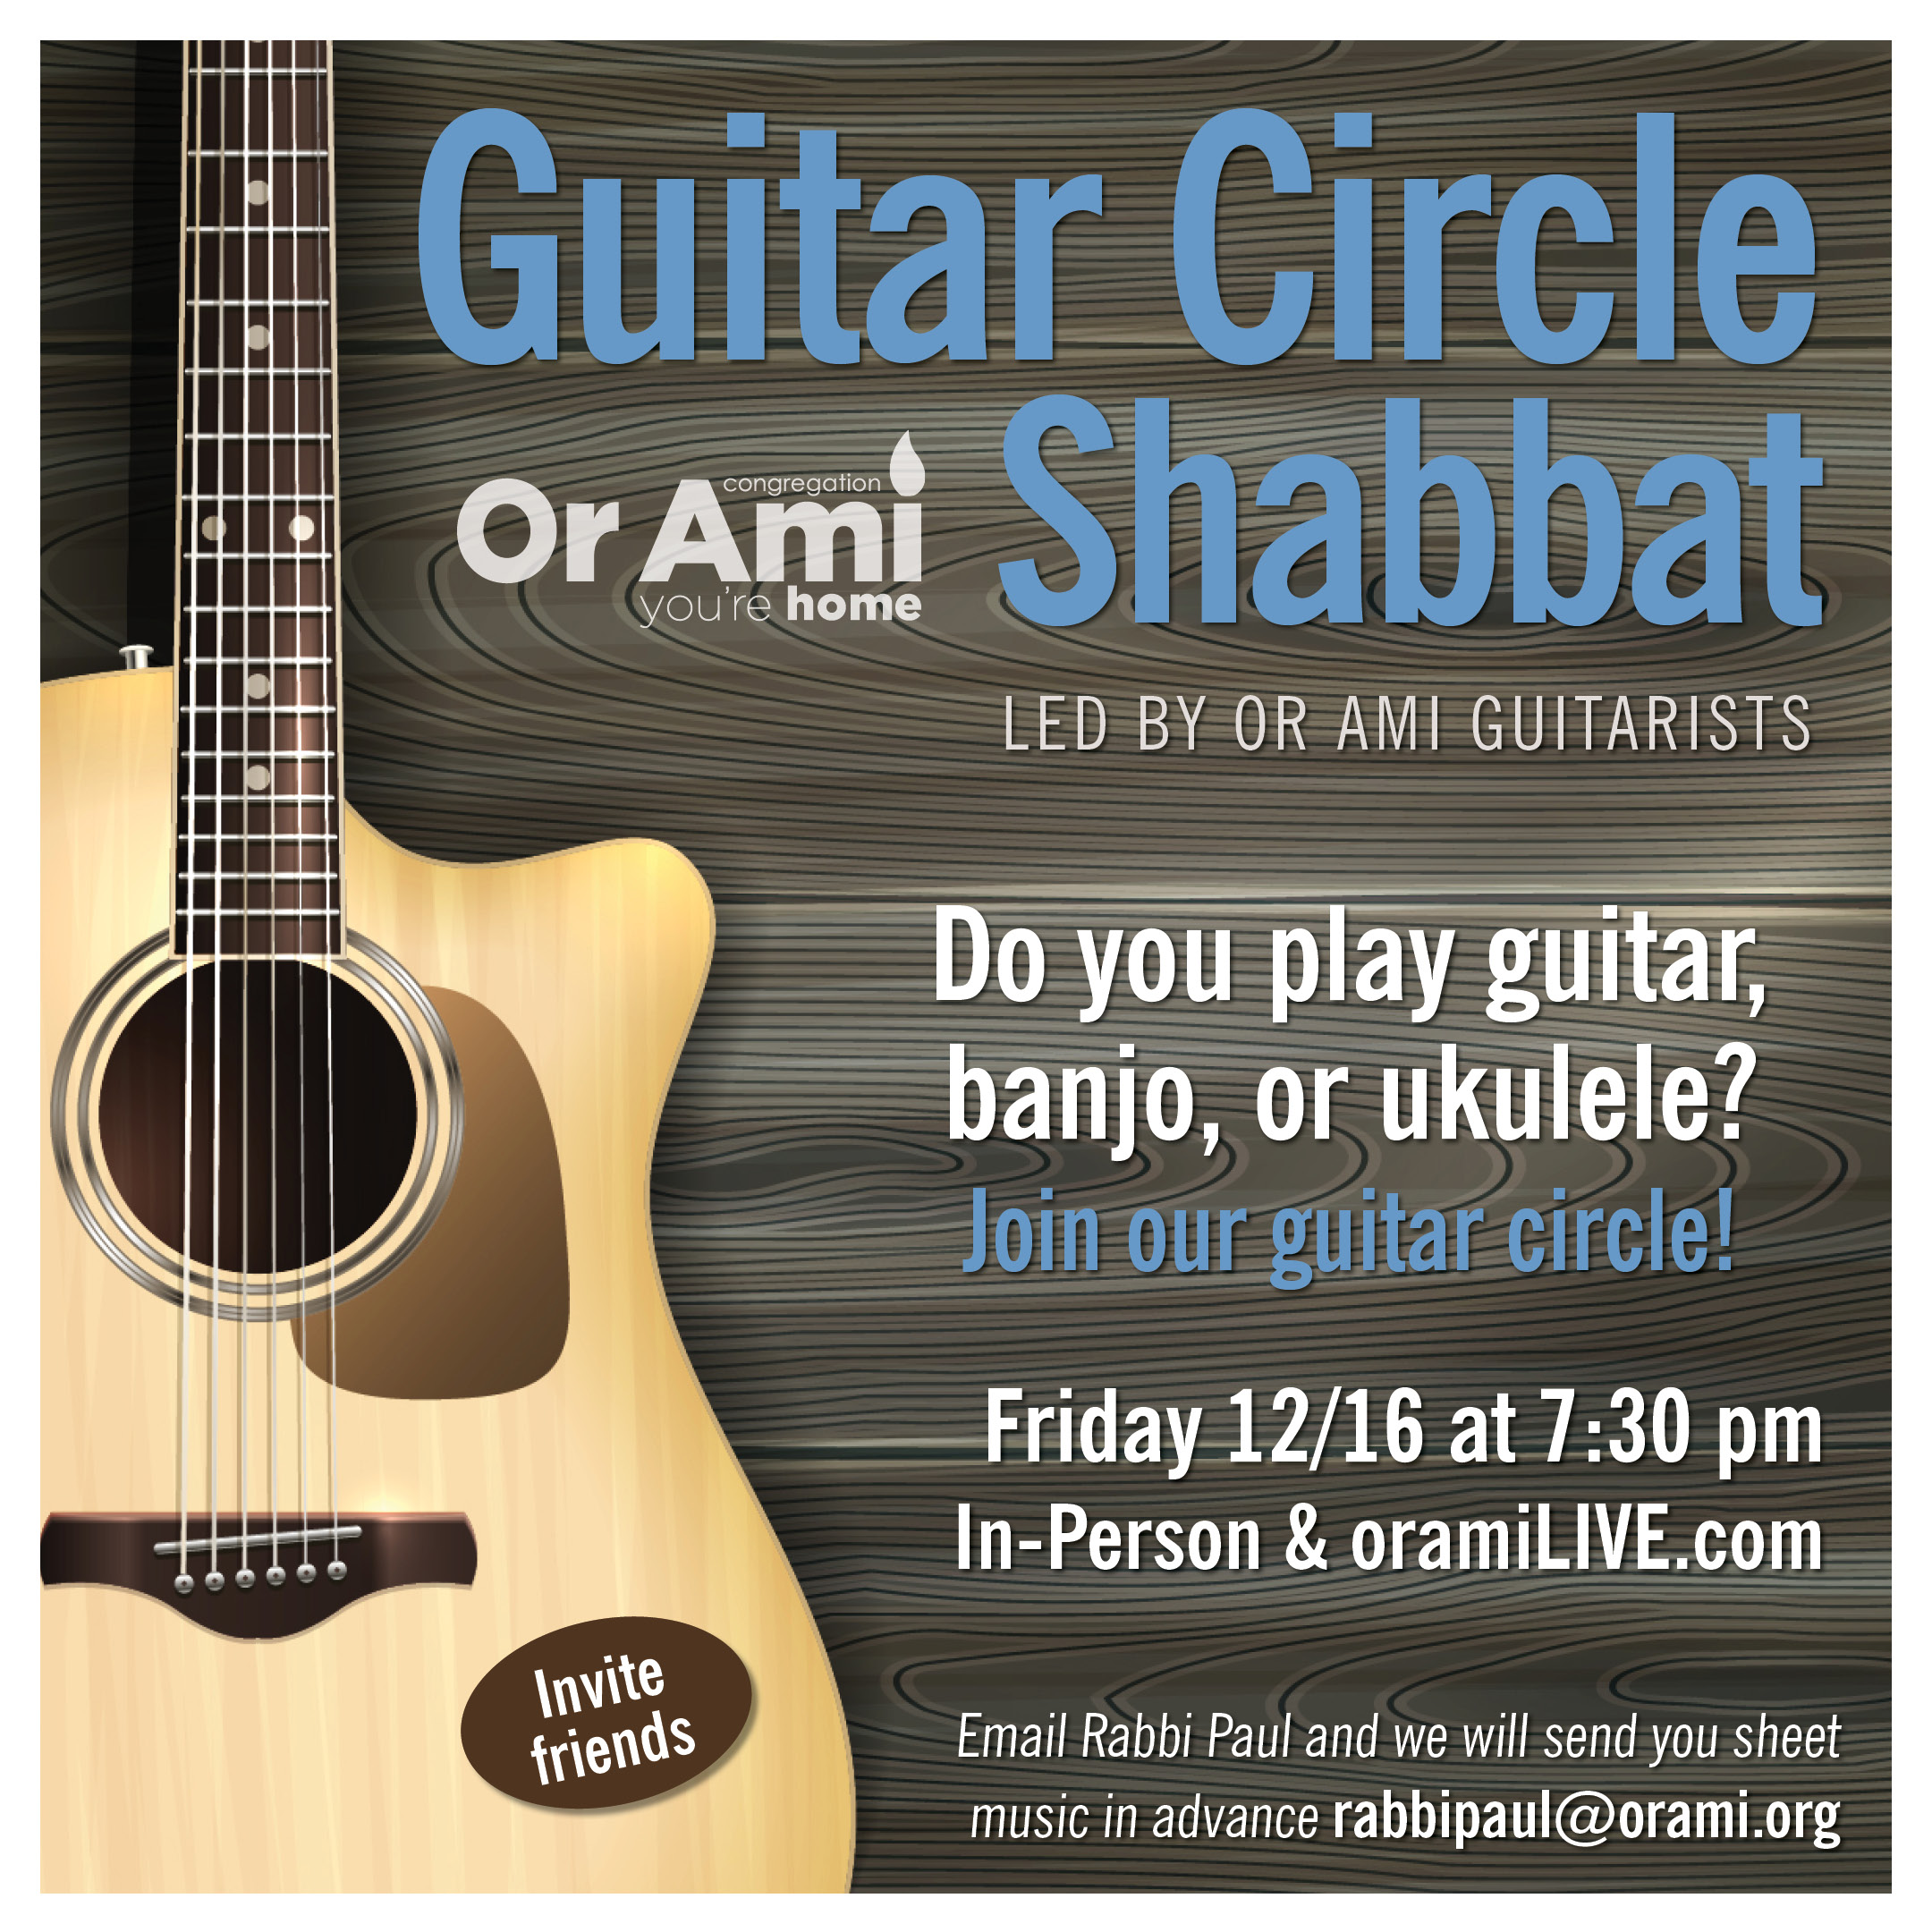 Or Ami Guitar Circle Shabbat